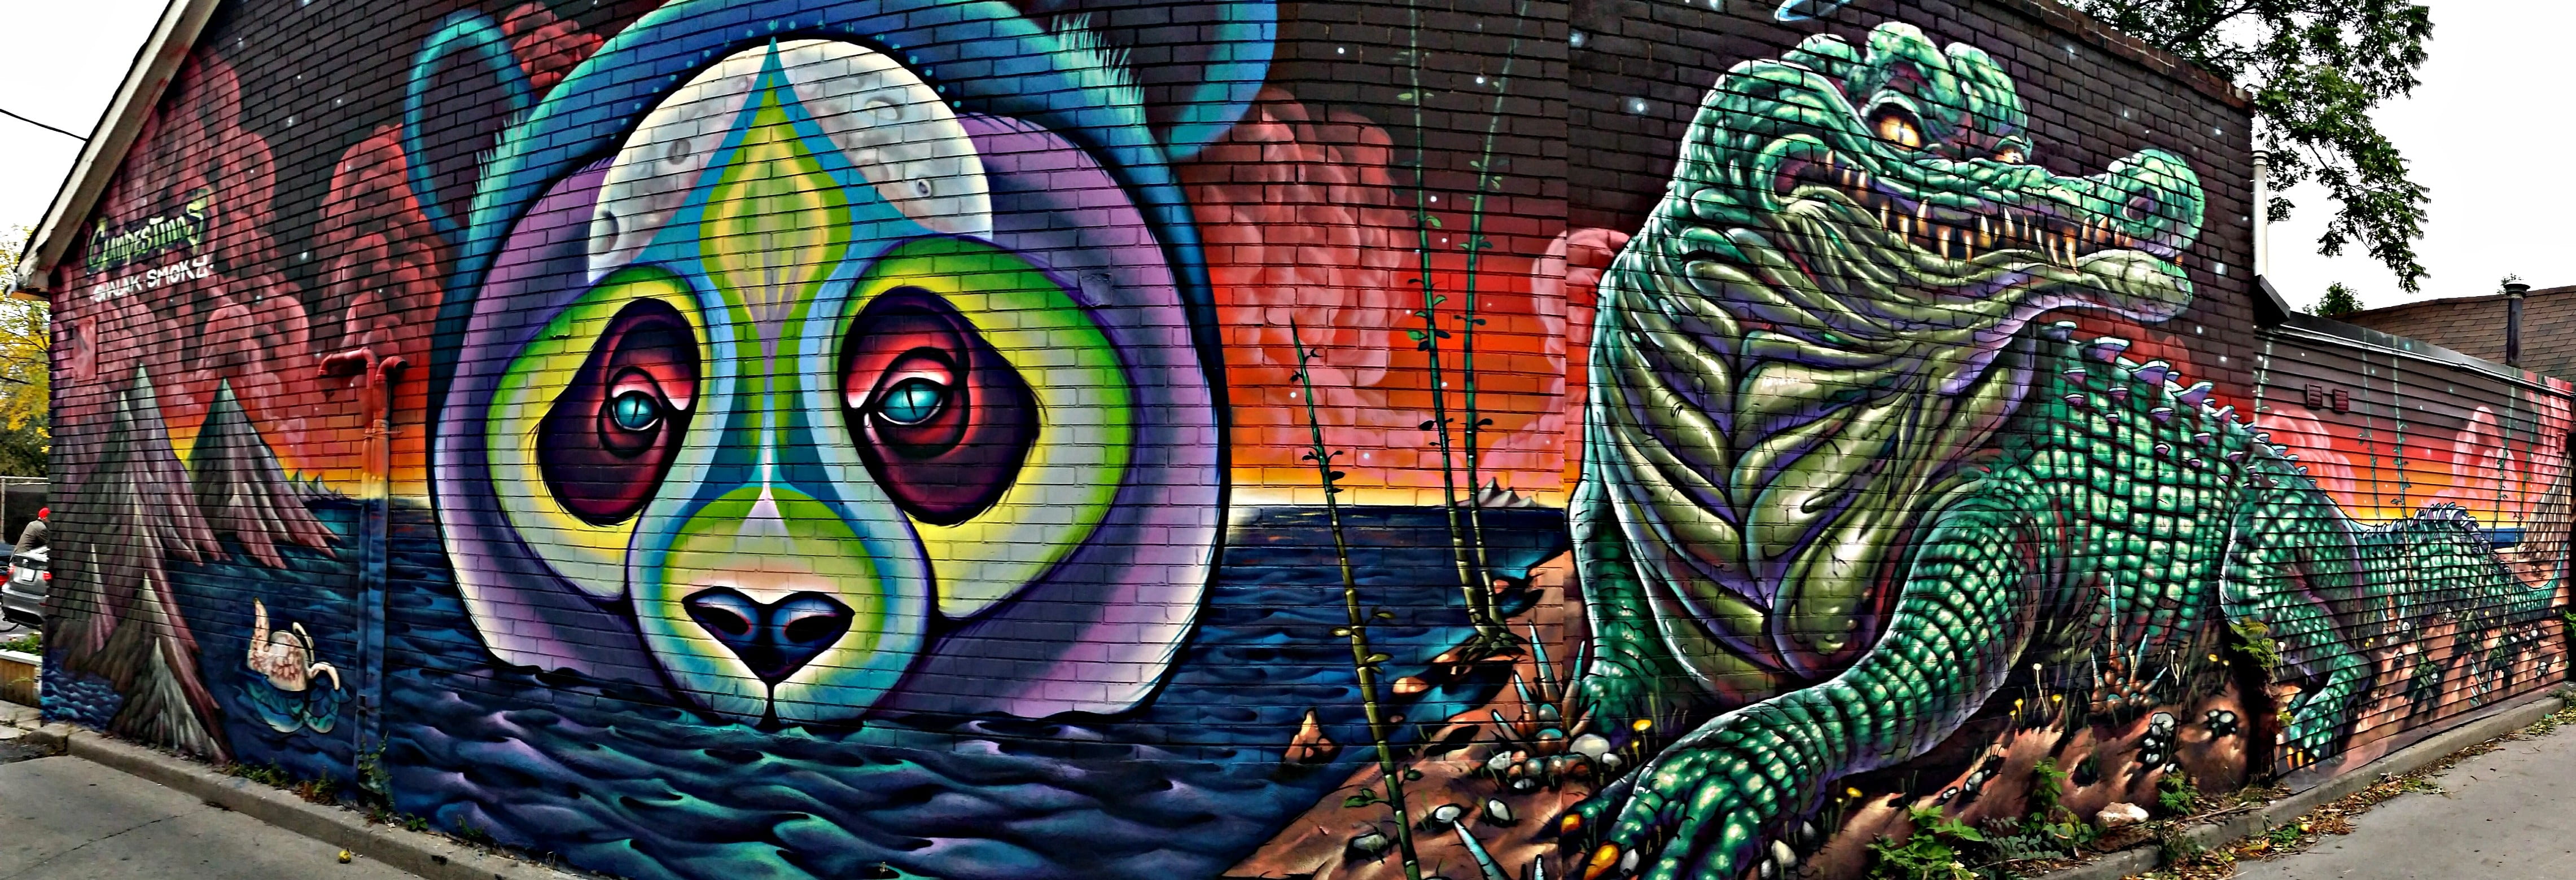 mural, grafiti, toronto, bruno shalak, art, urban, multi colored